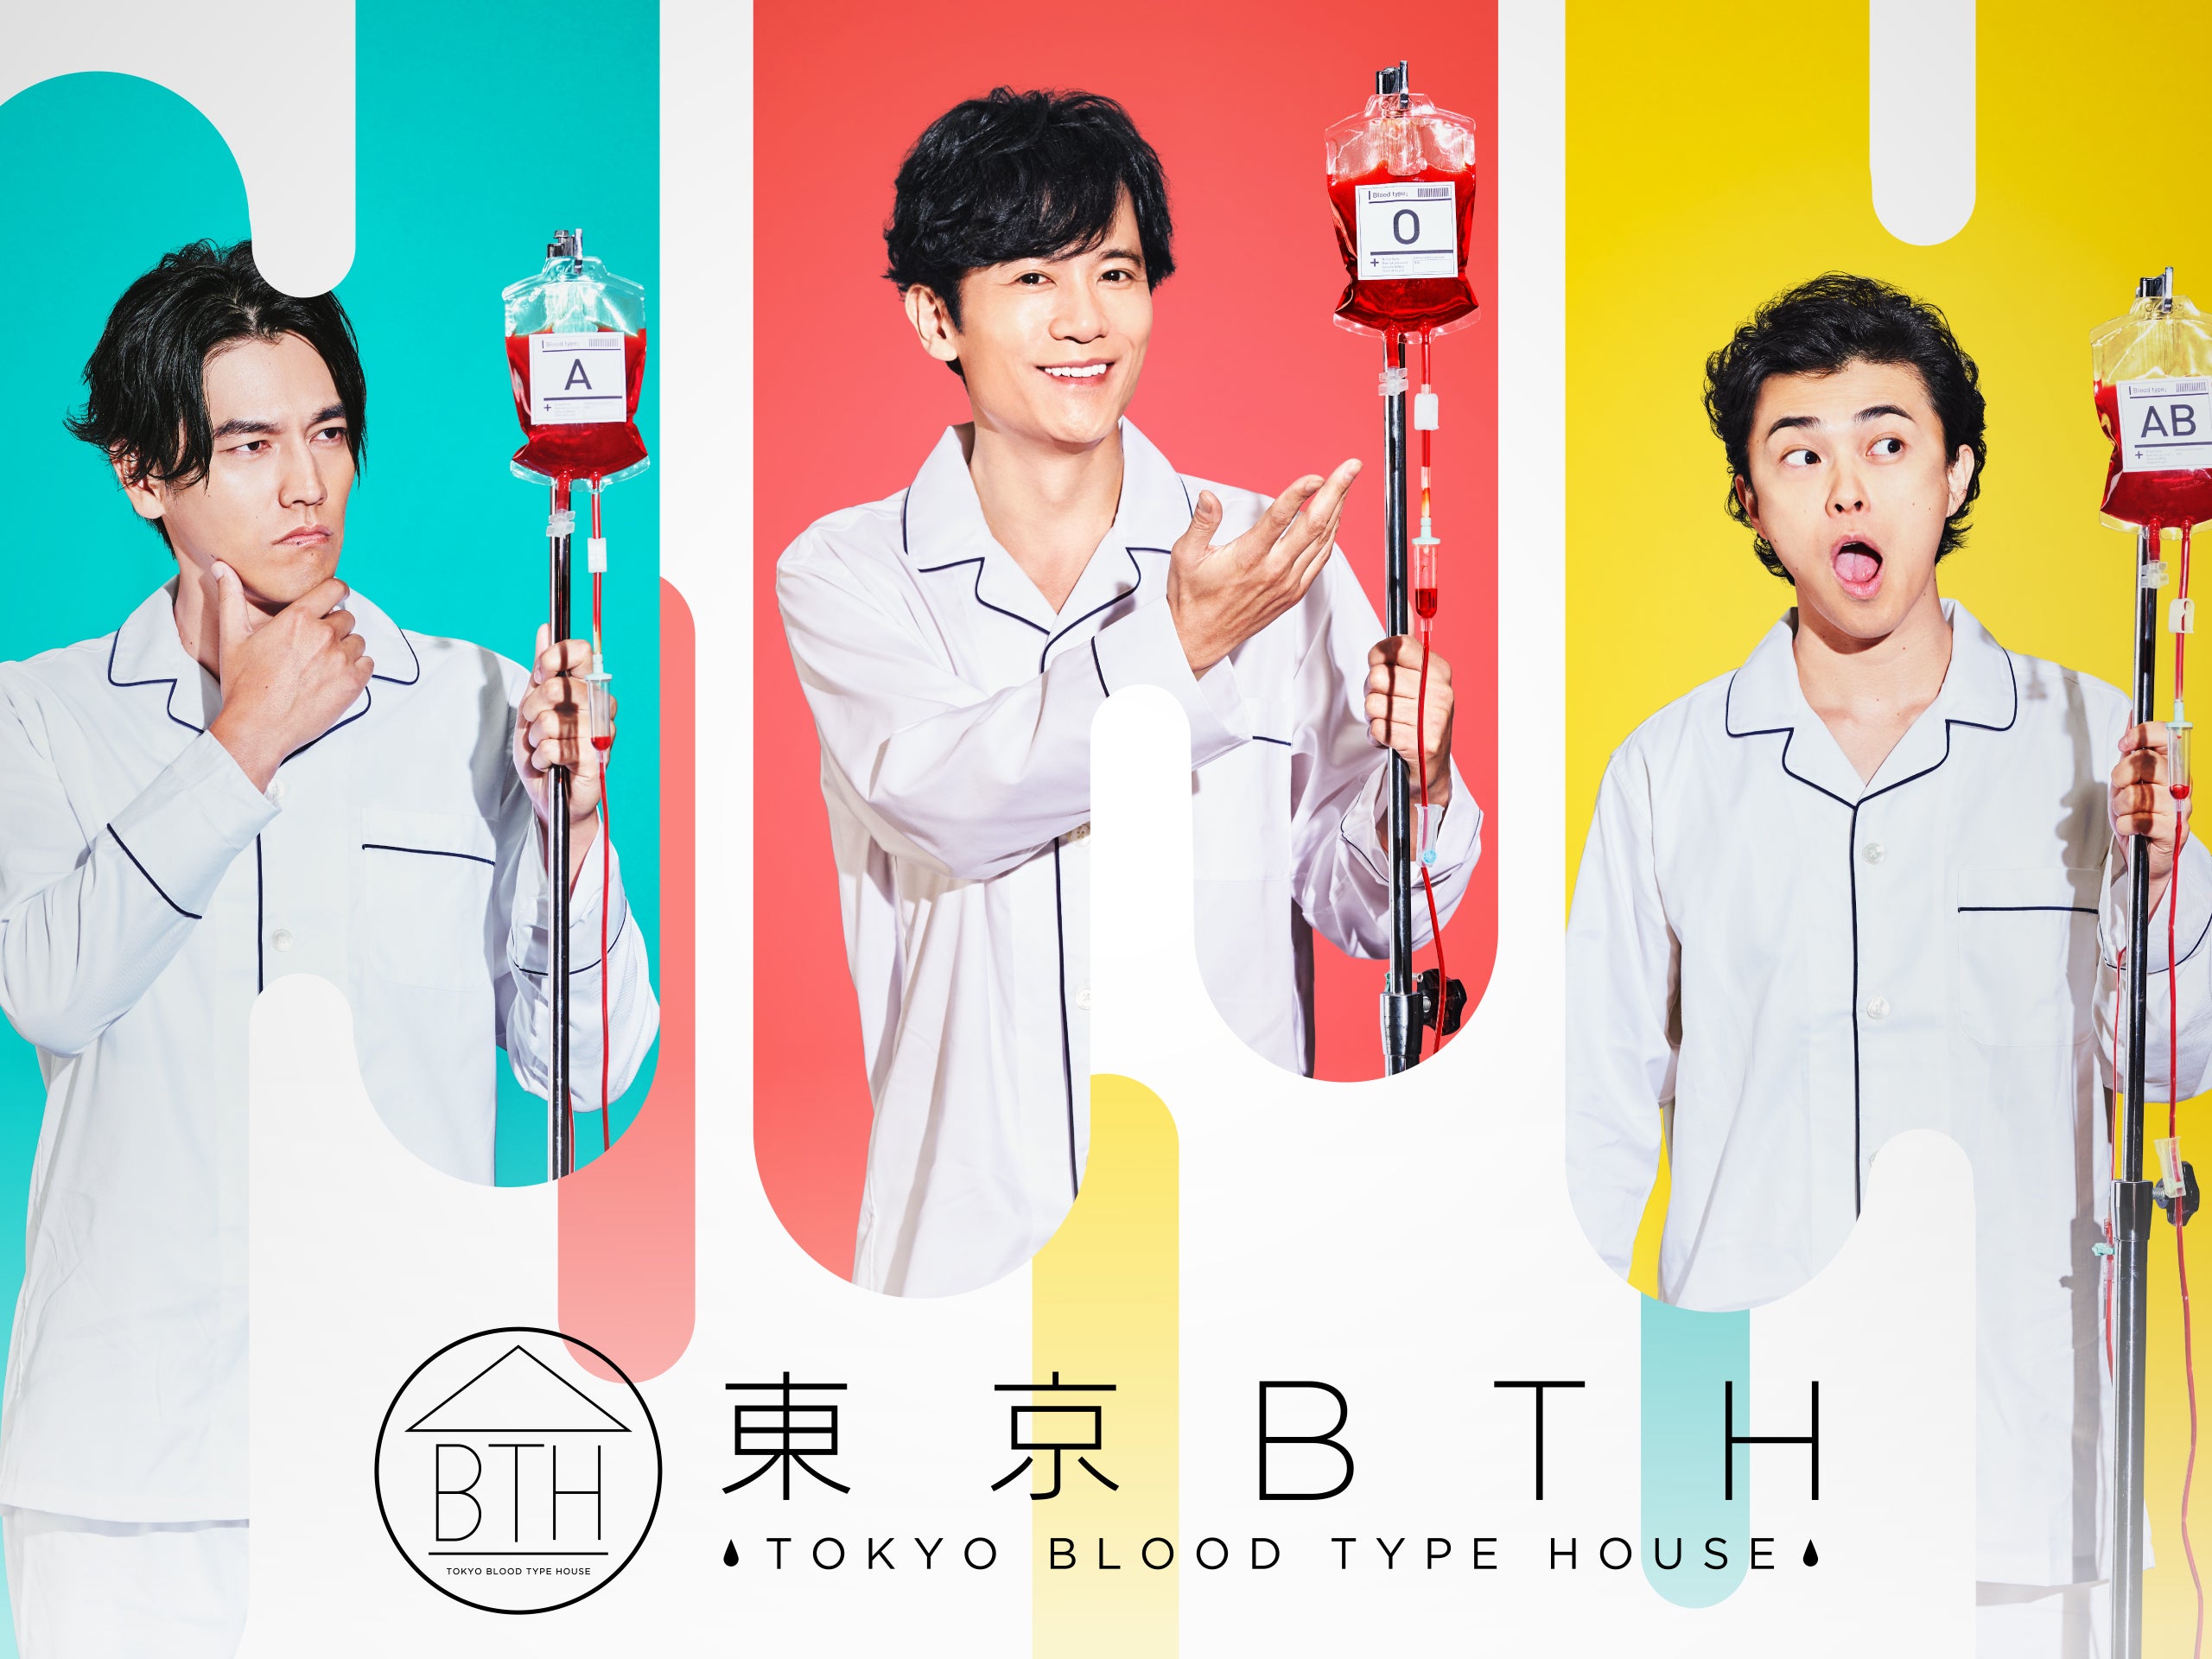 TV ratings for Tokyo Bth: Tokyo Blood Type House (東京BTH〜TOKYO BLOOD TYPE HOUSE〜) in Russia. Amazon Prime Video TV series